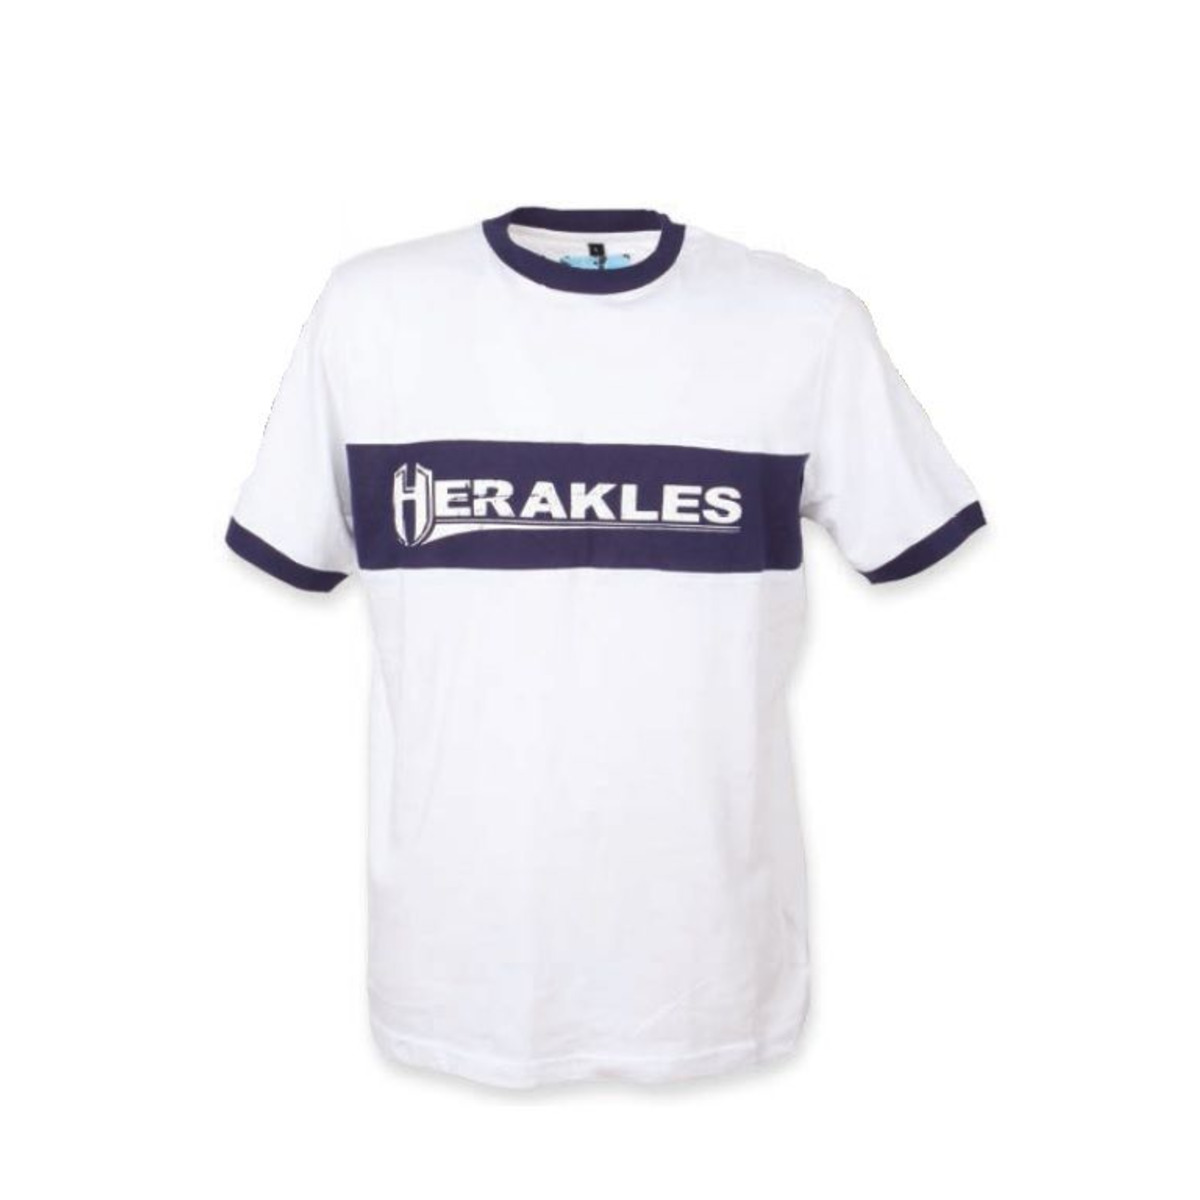 Herakles T-Shirt Weiß-Blau - S